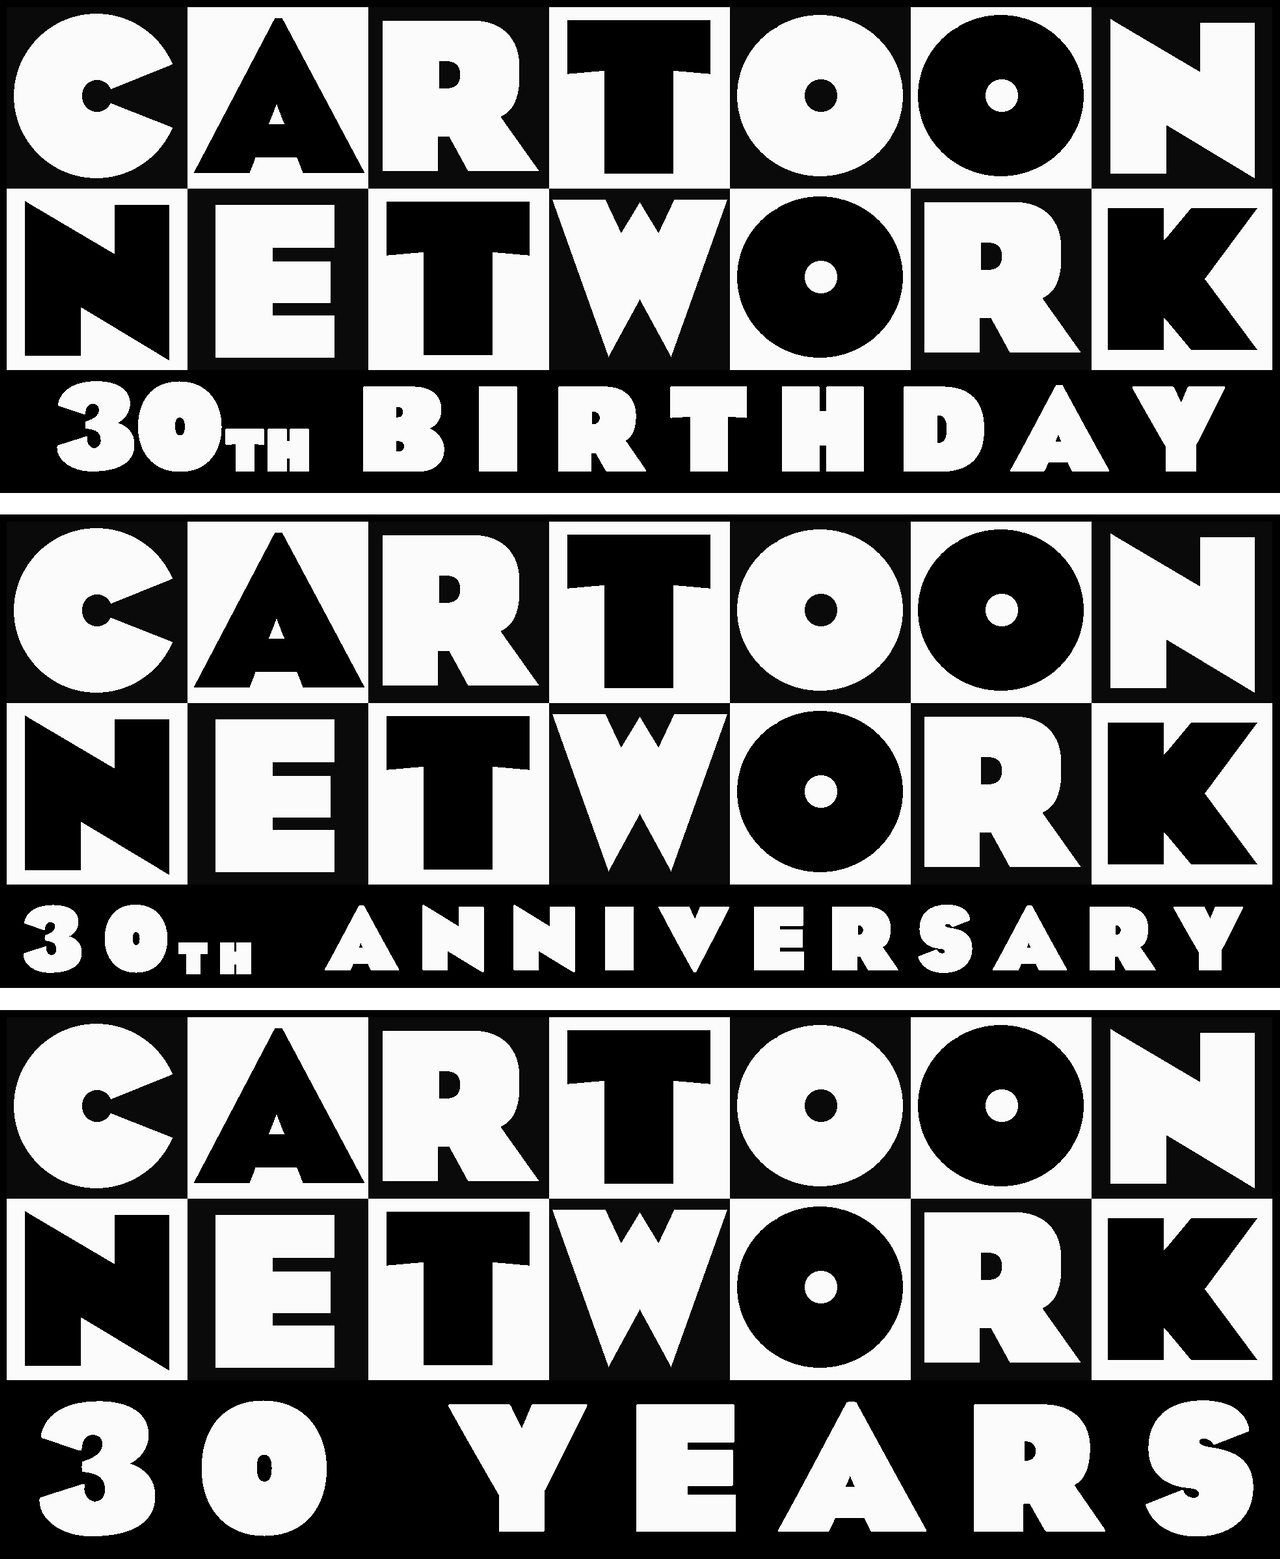 Cartoon Network Studios Throwback Logo by ABFan21 on DeviantArt